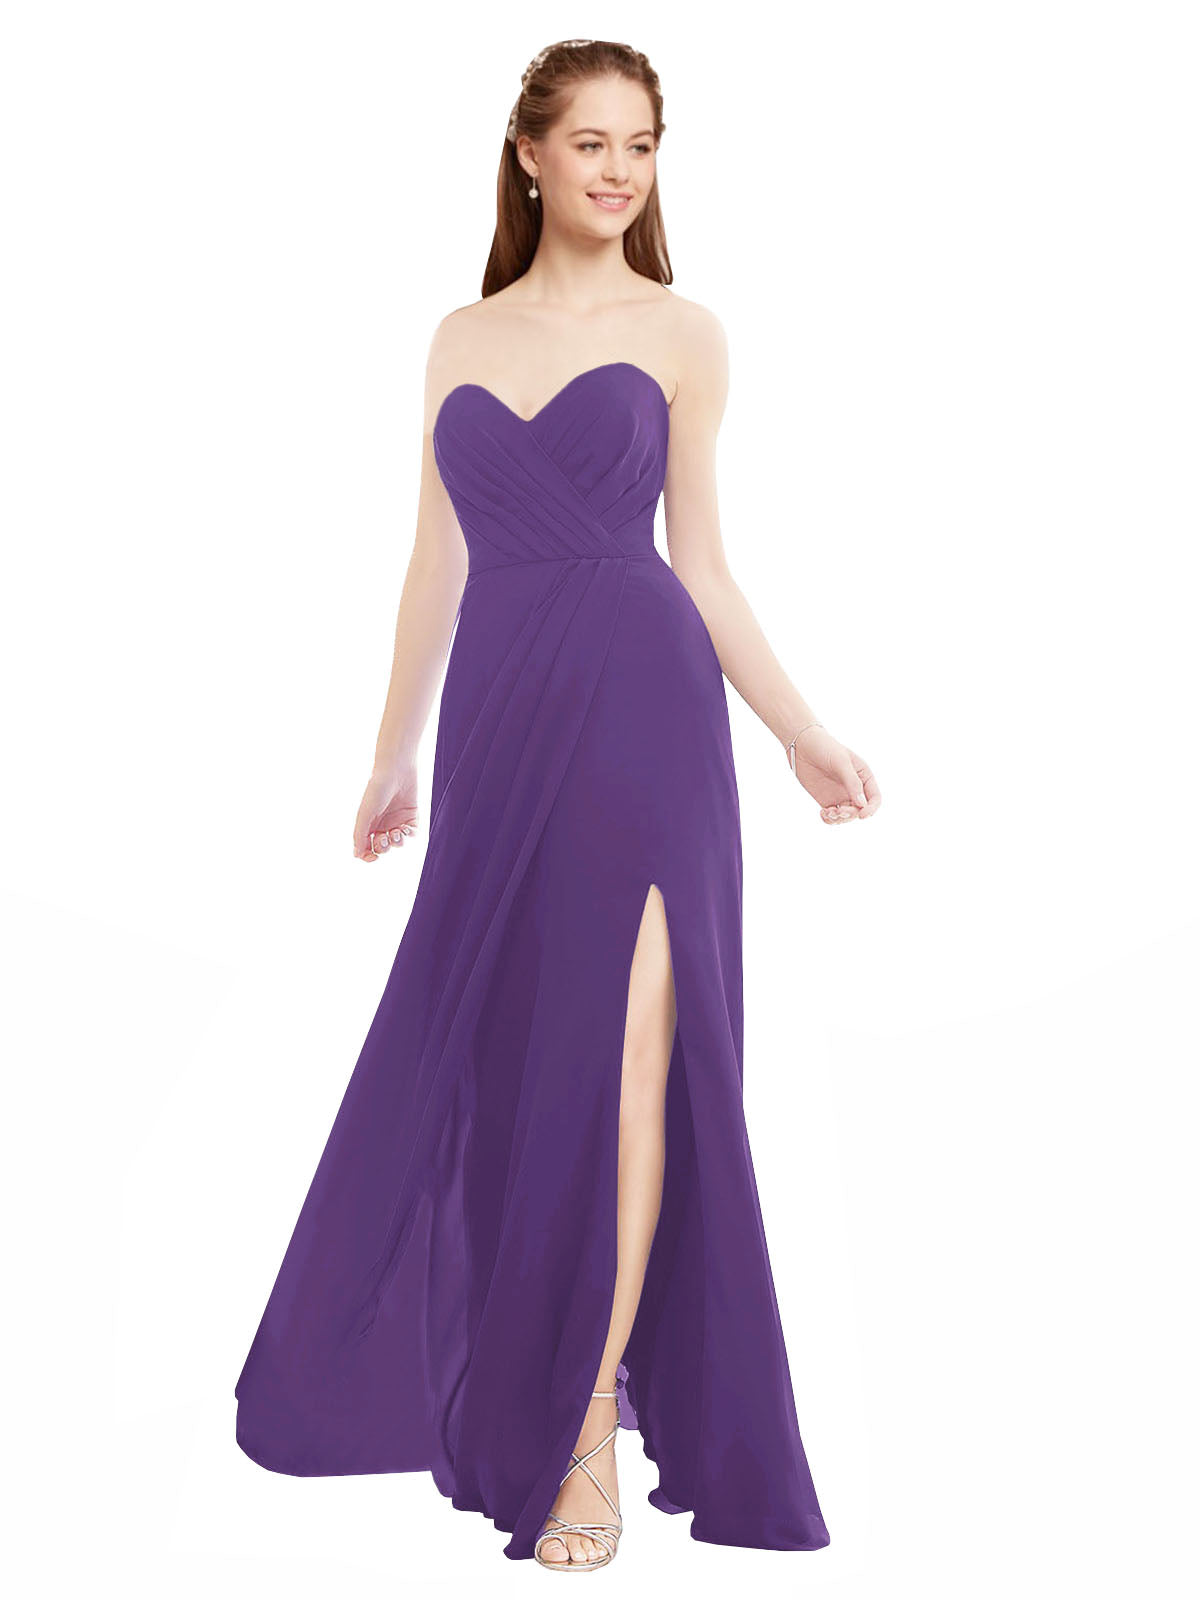 Plum Purple A-Line Sweetheart Strapless Sleeveless Long Bridesmaid Dress Meadow